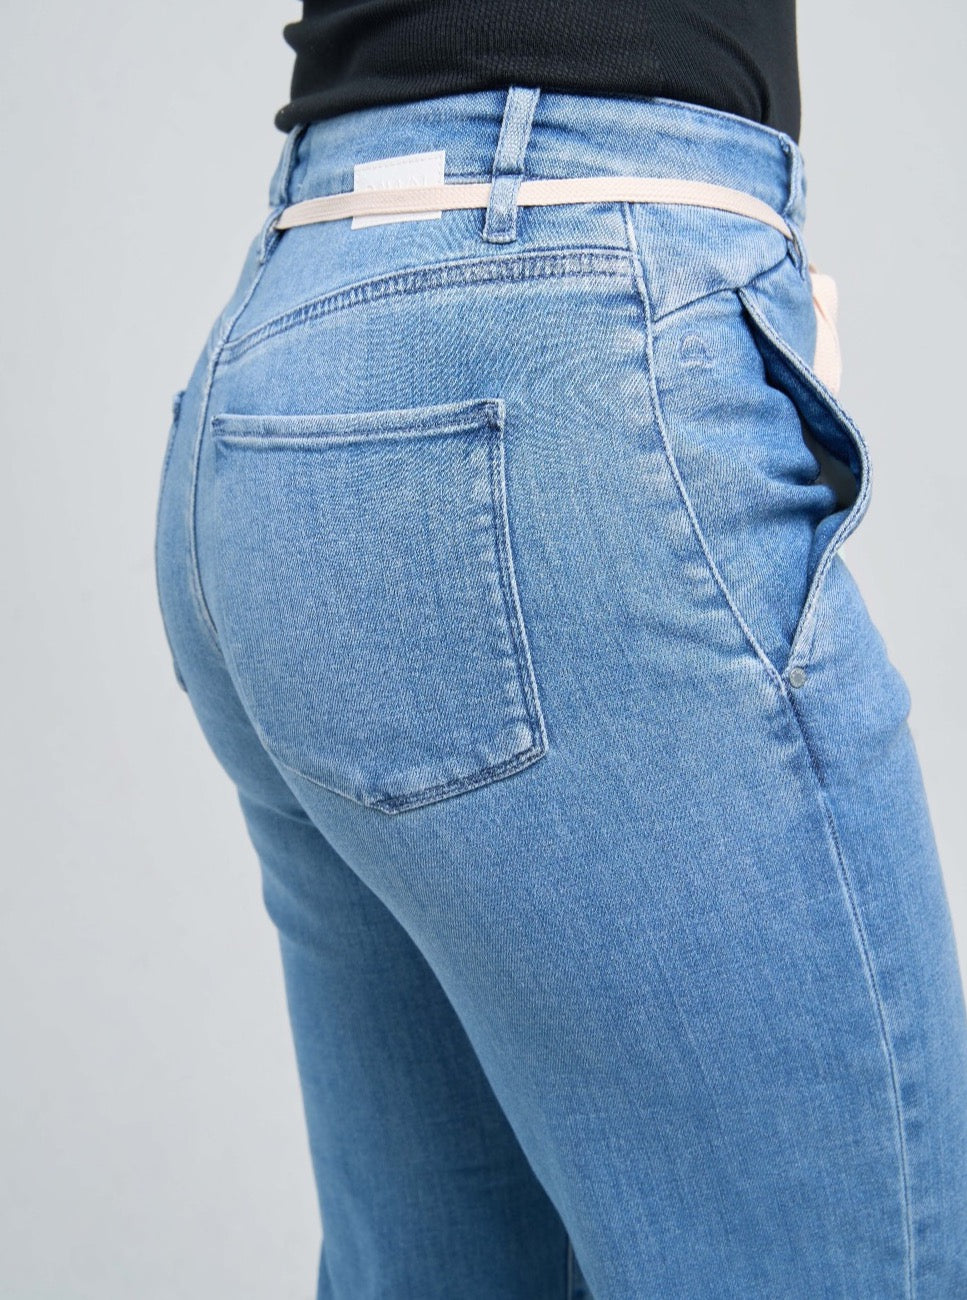 detail van achterkant zakken jeans Dew